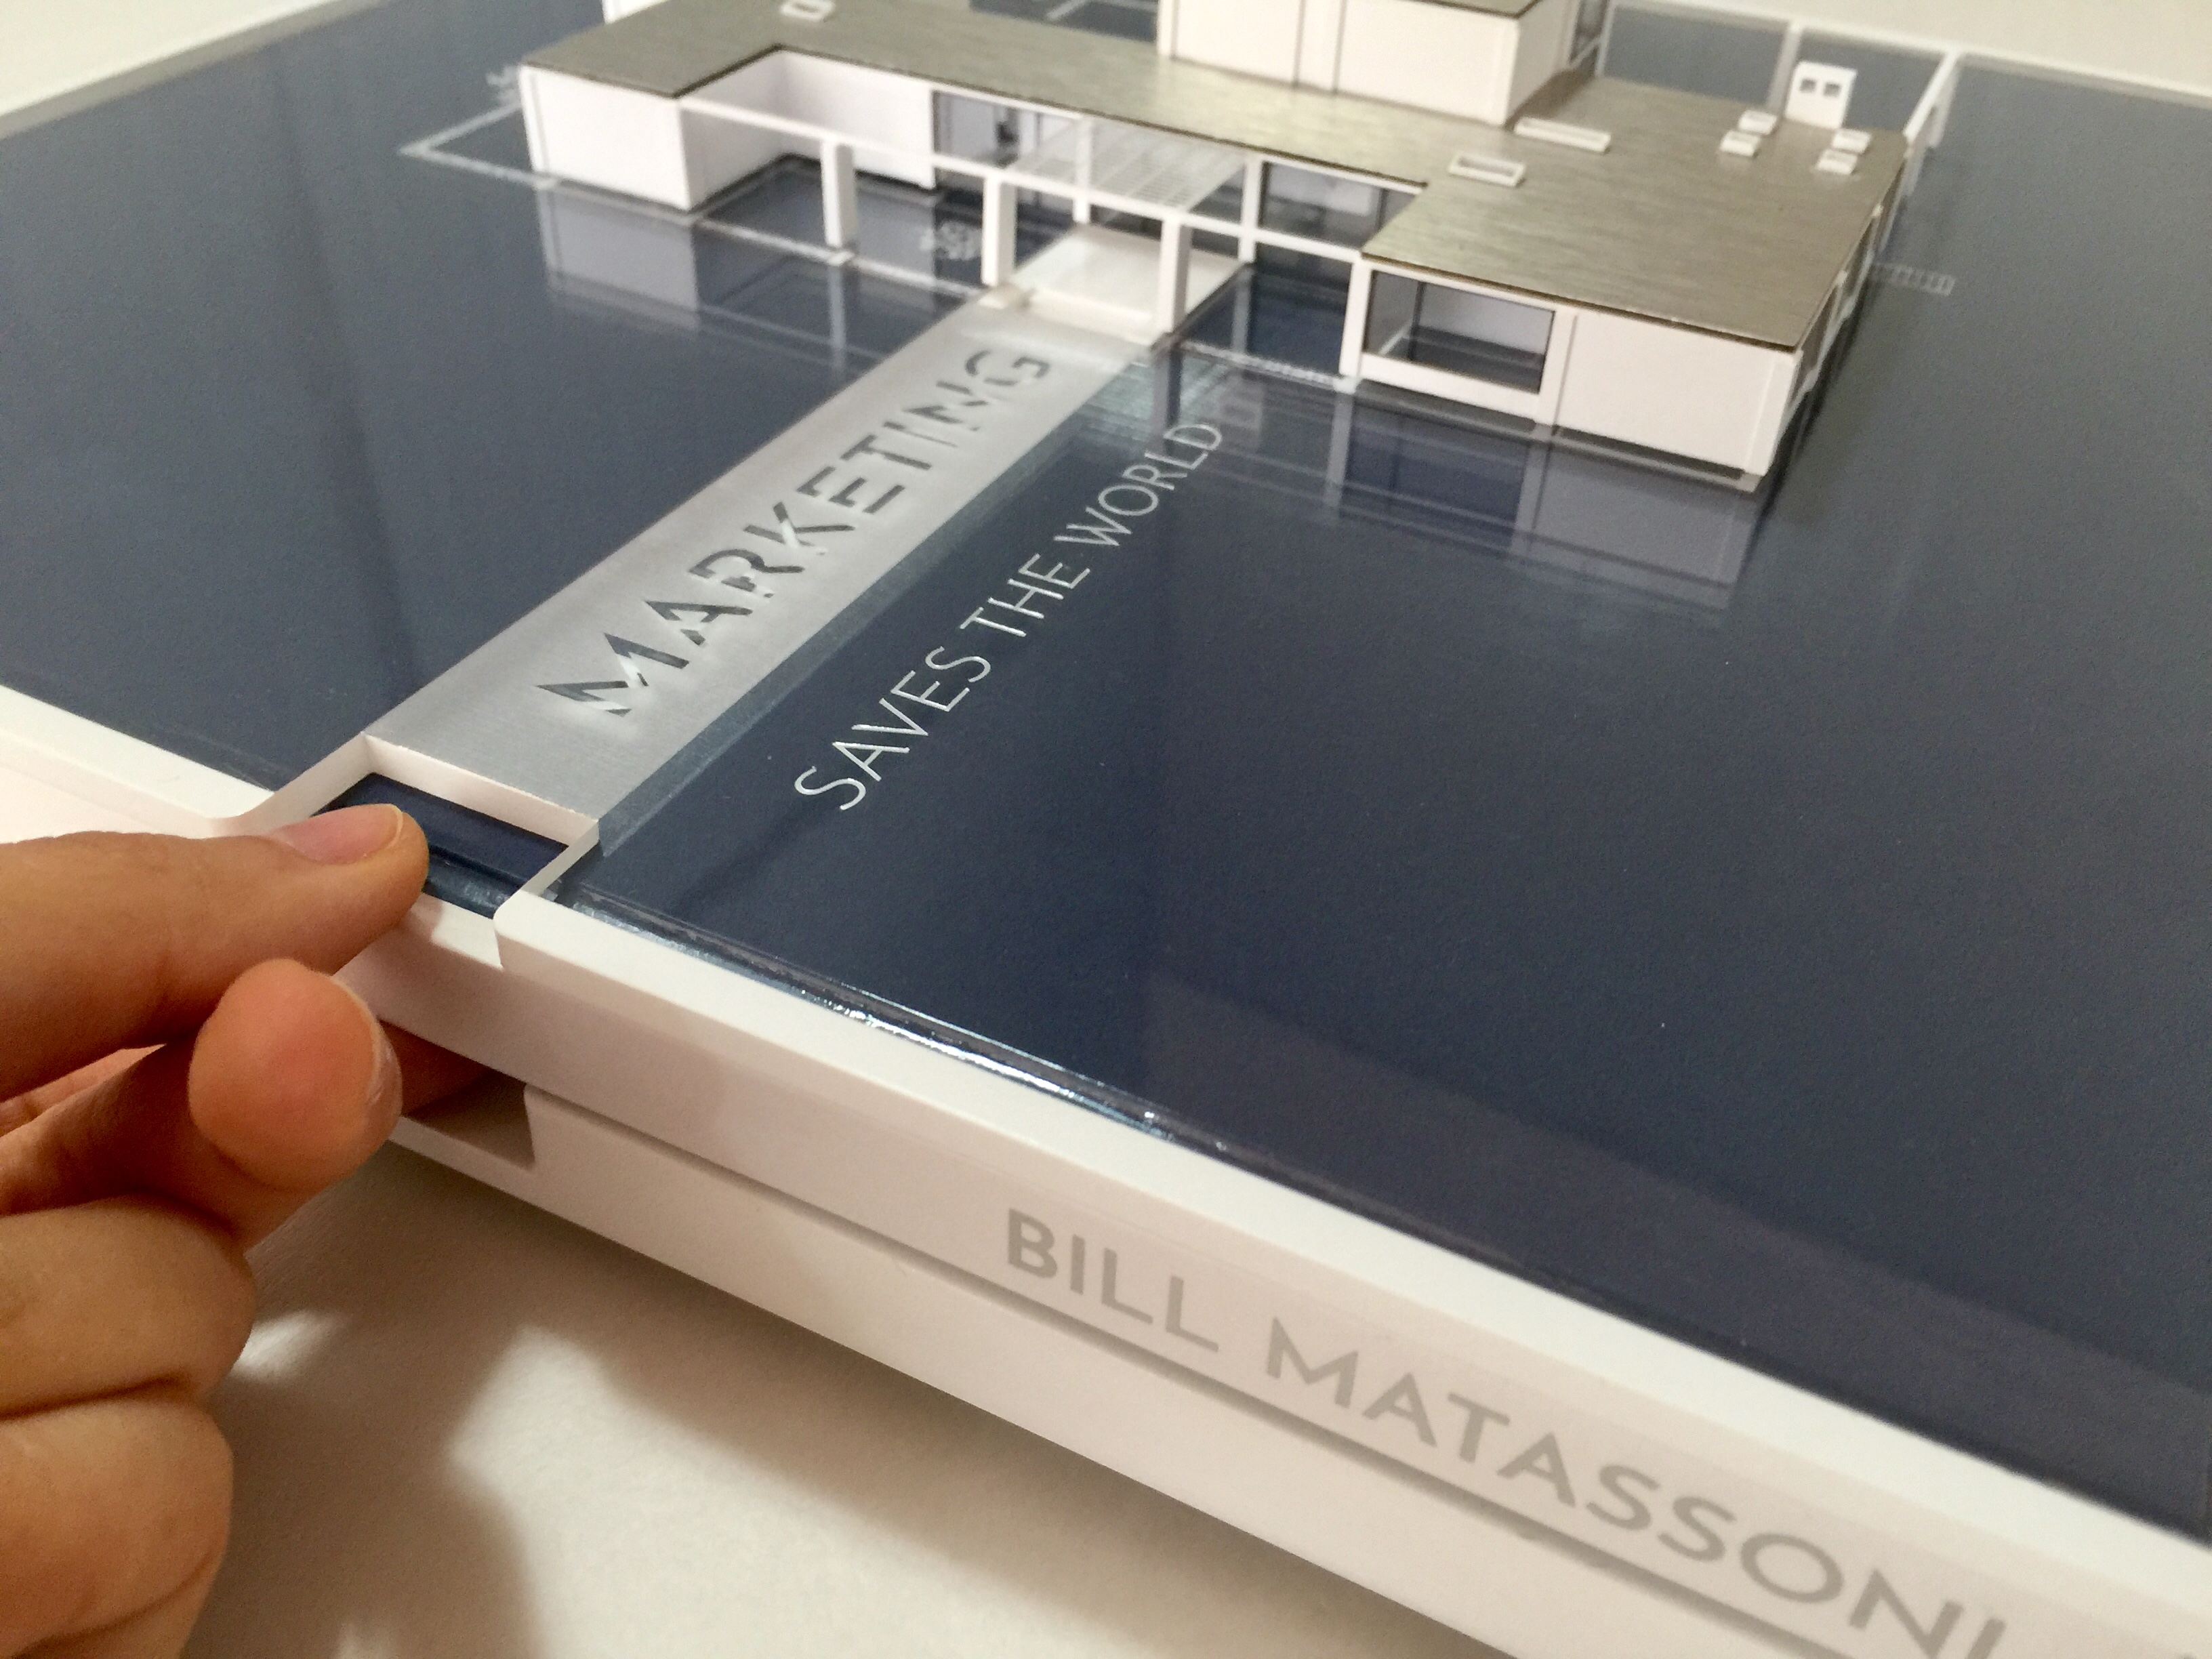 Bill Matassoni Limited Edition Memoir 2